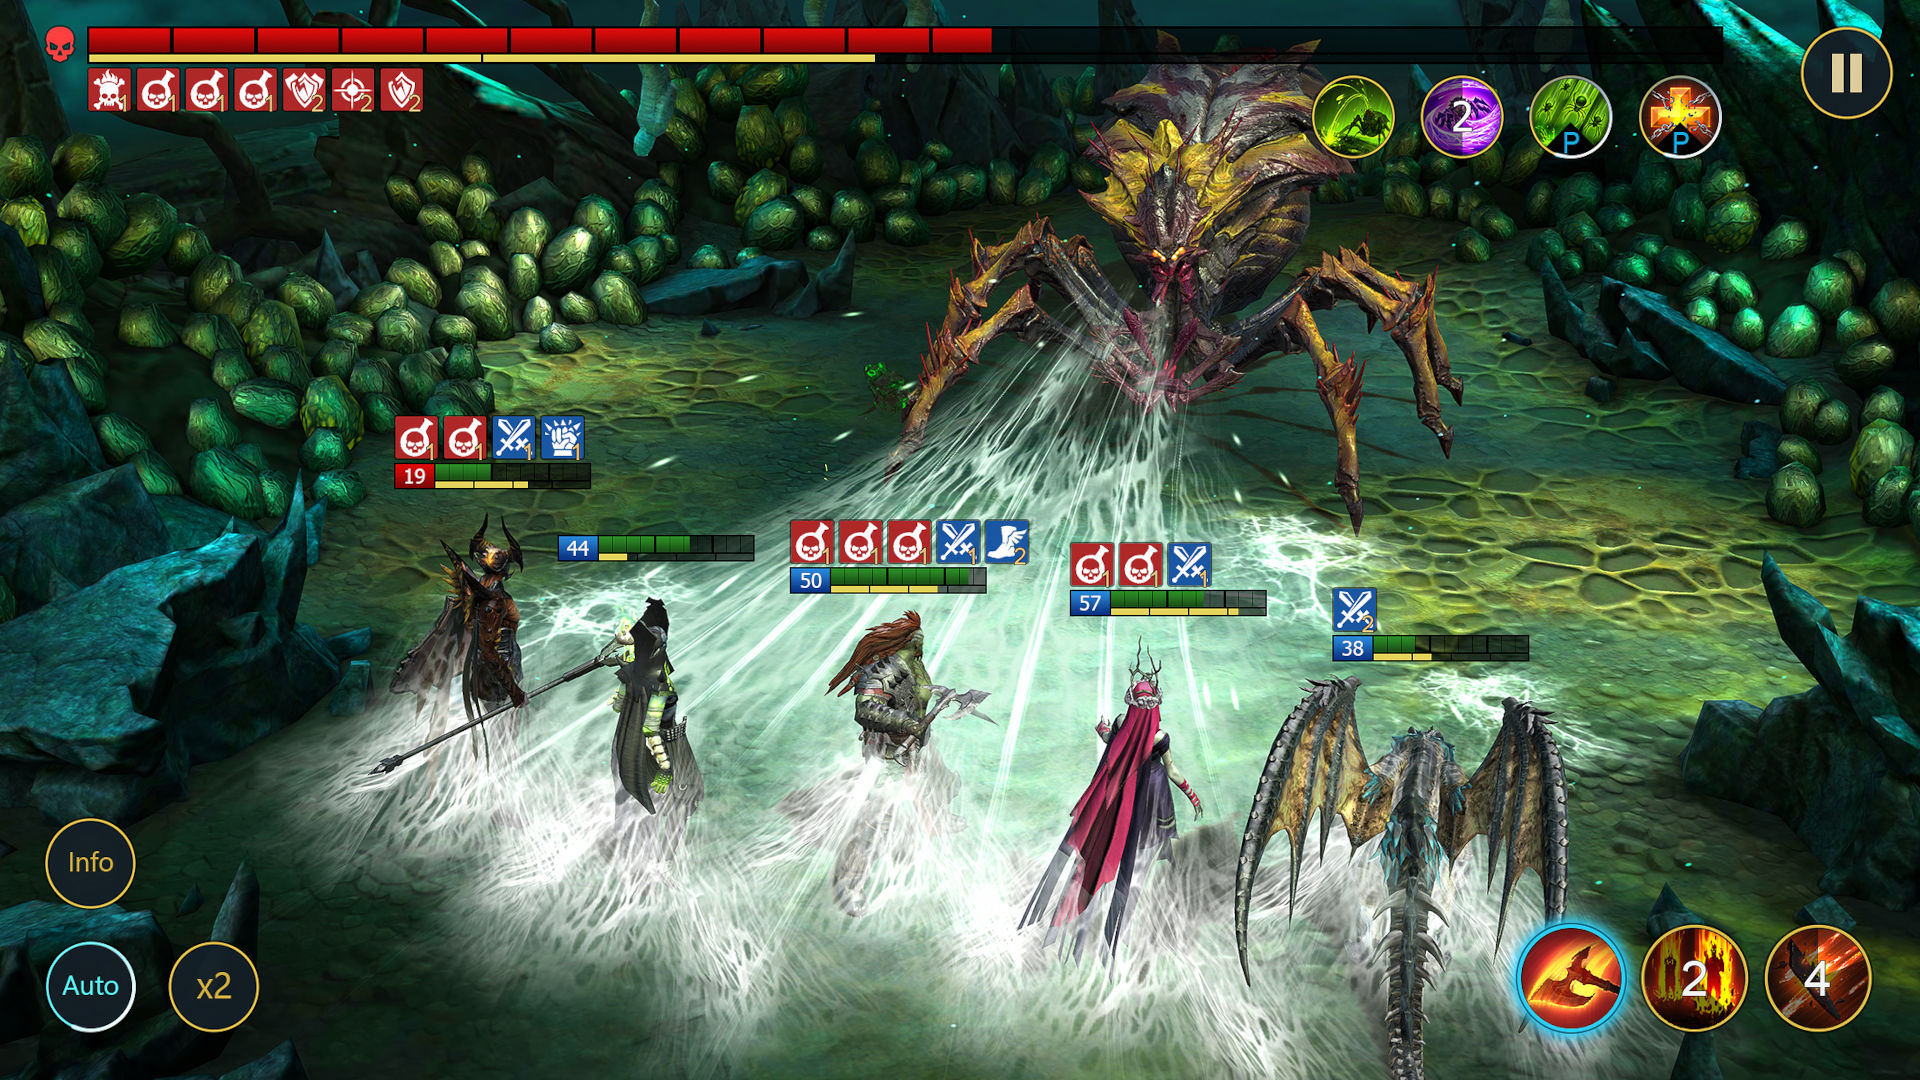 Tower Defense Fantasy King - jogos offline grátis::Appstore  for Android